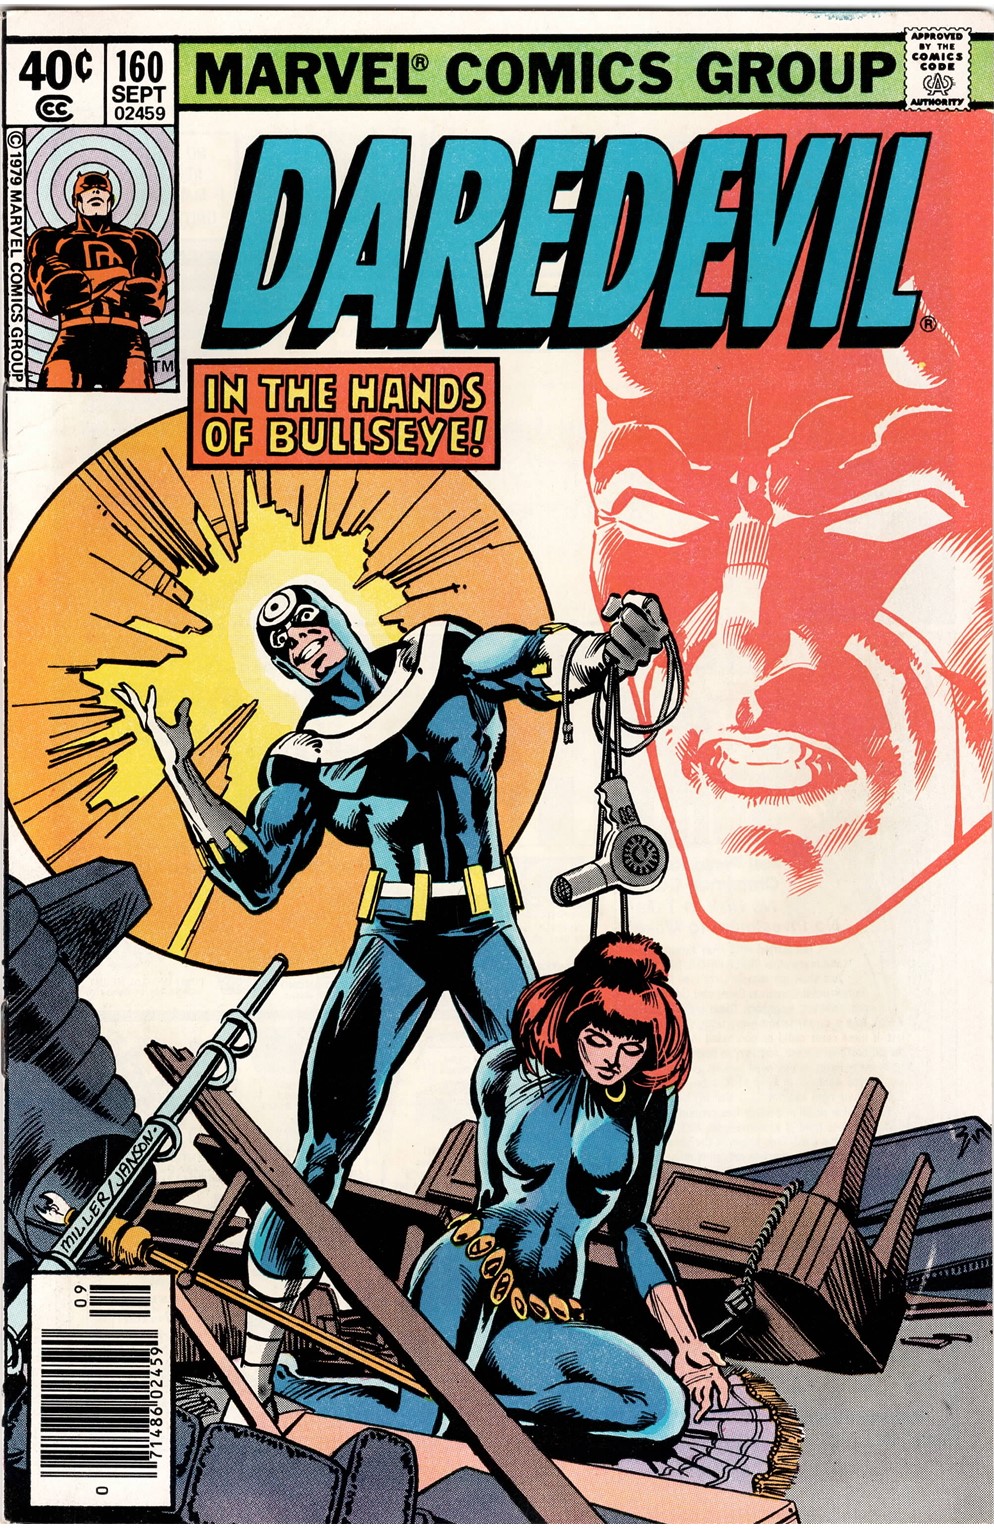 Daredevil #160 Newsstand Variant